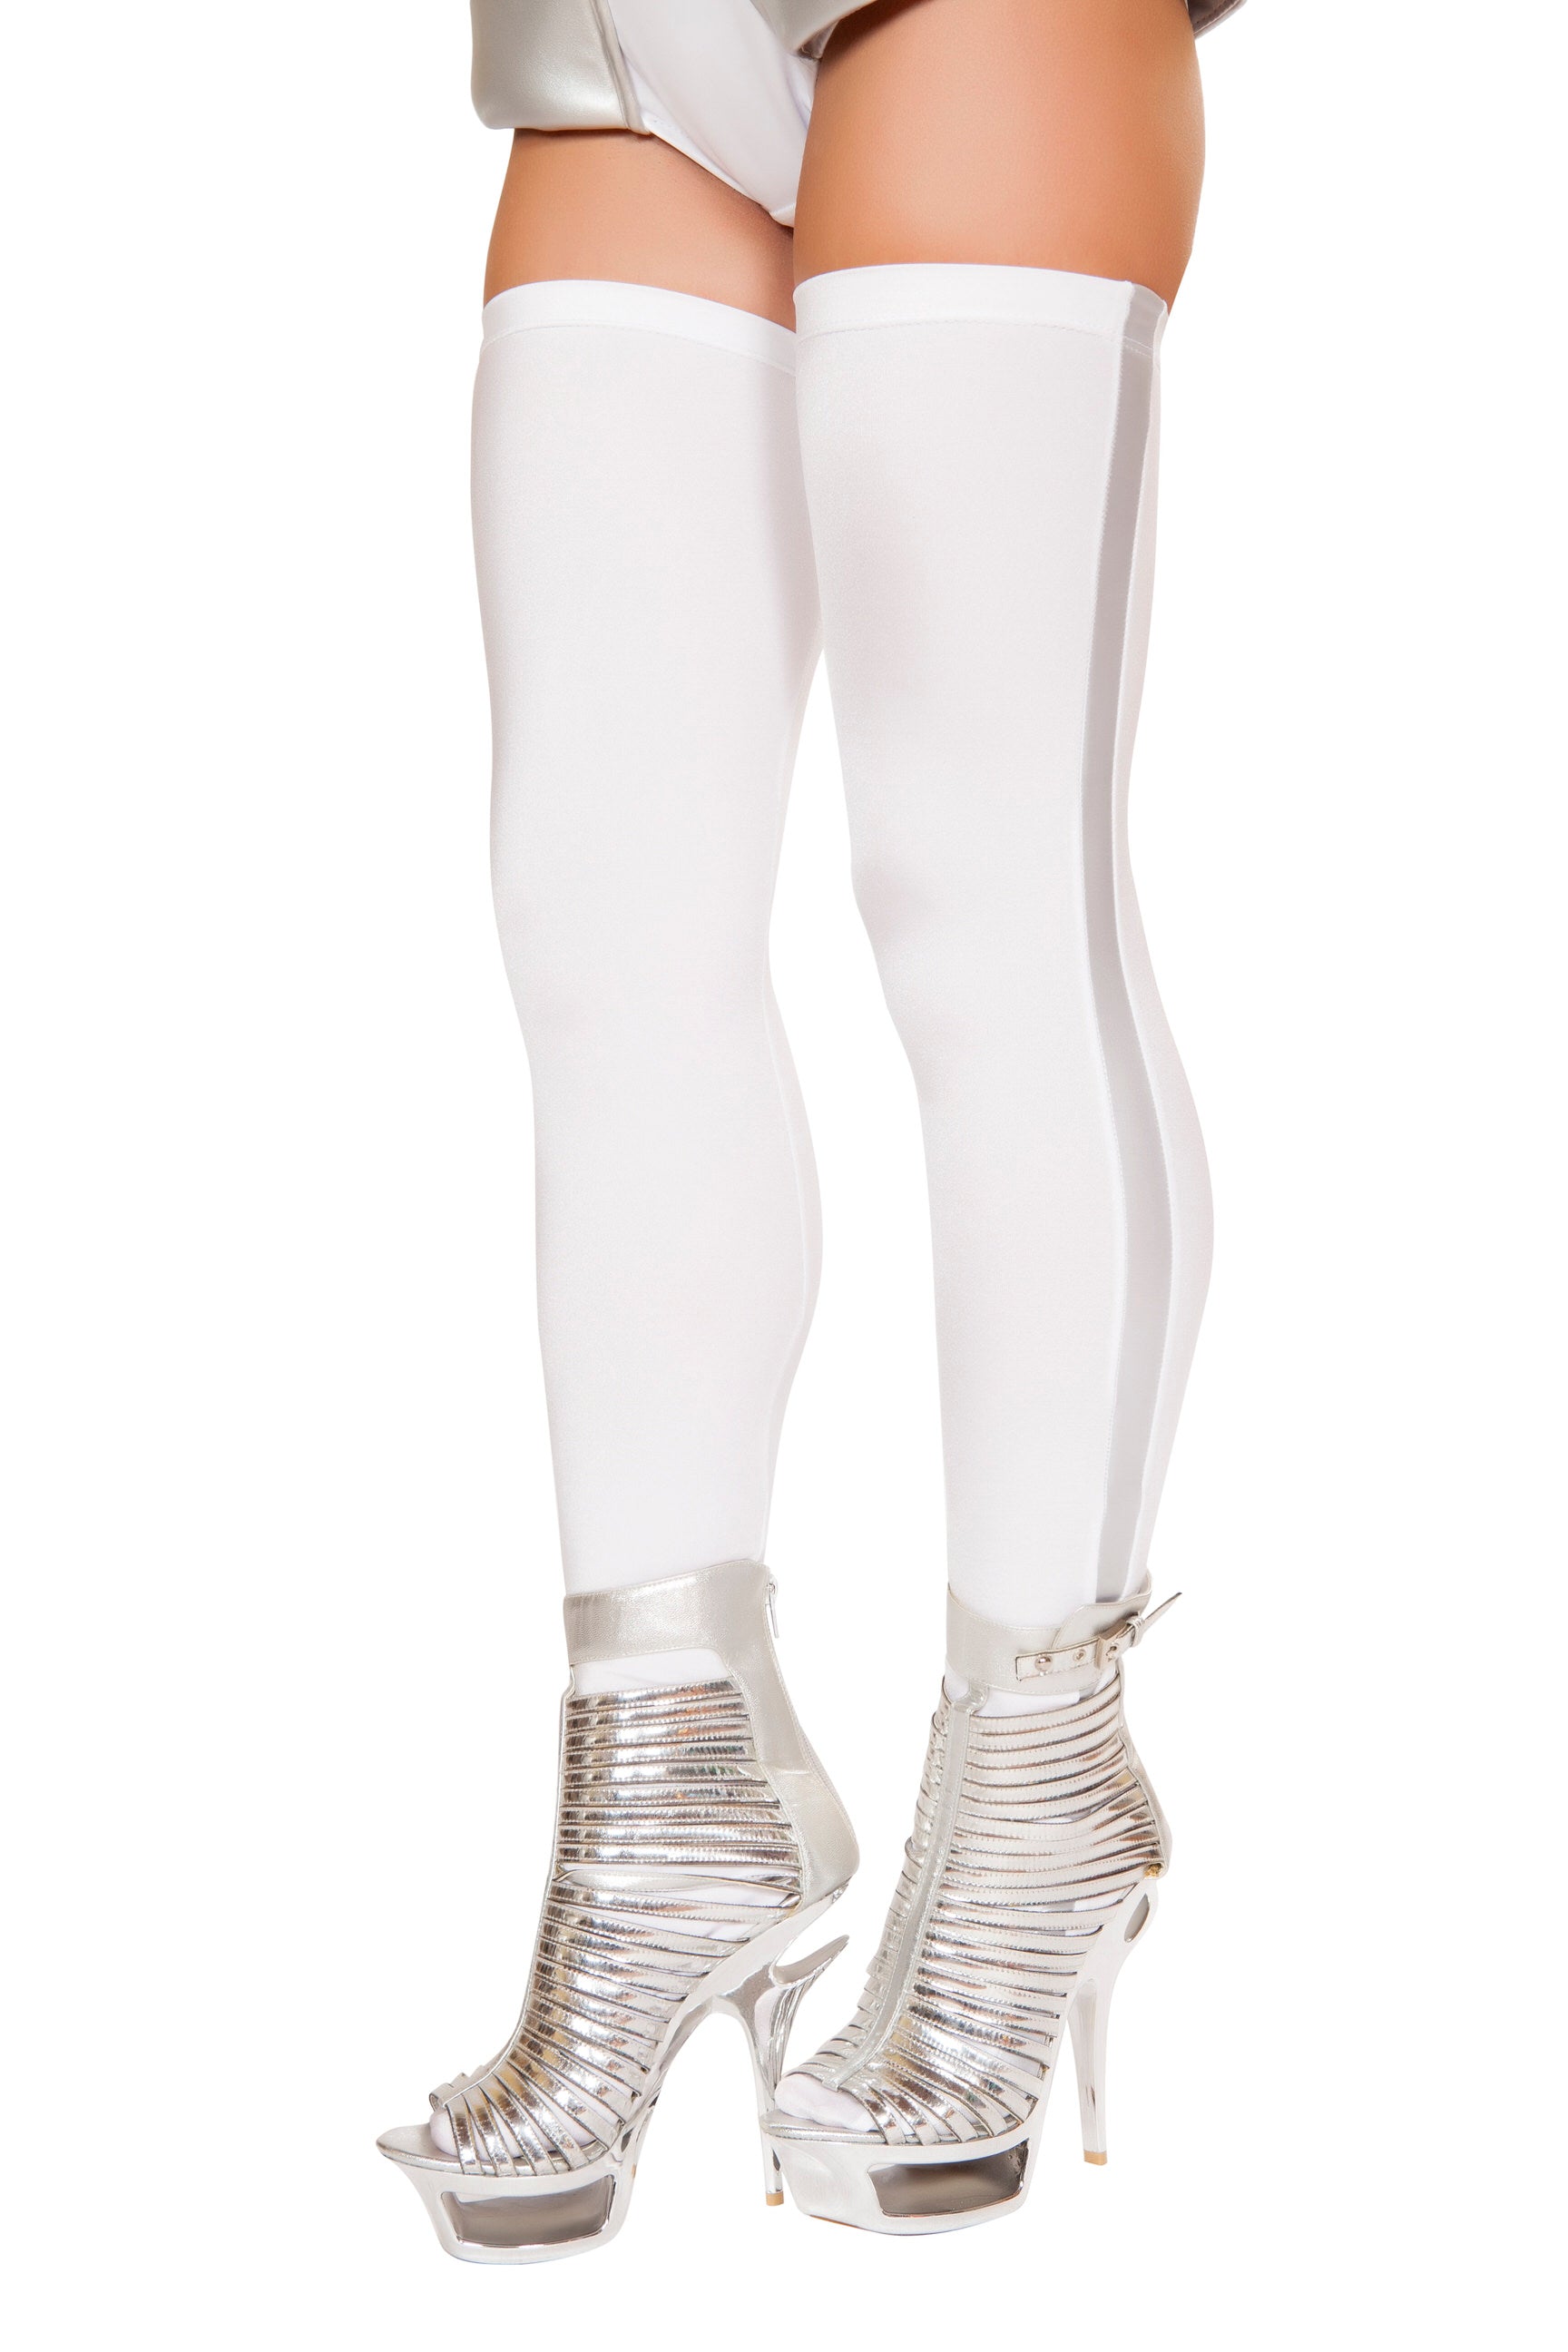 Roma Costume Thigh High Astronaut Leggings White/Grey One Size